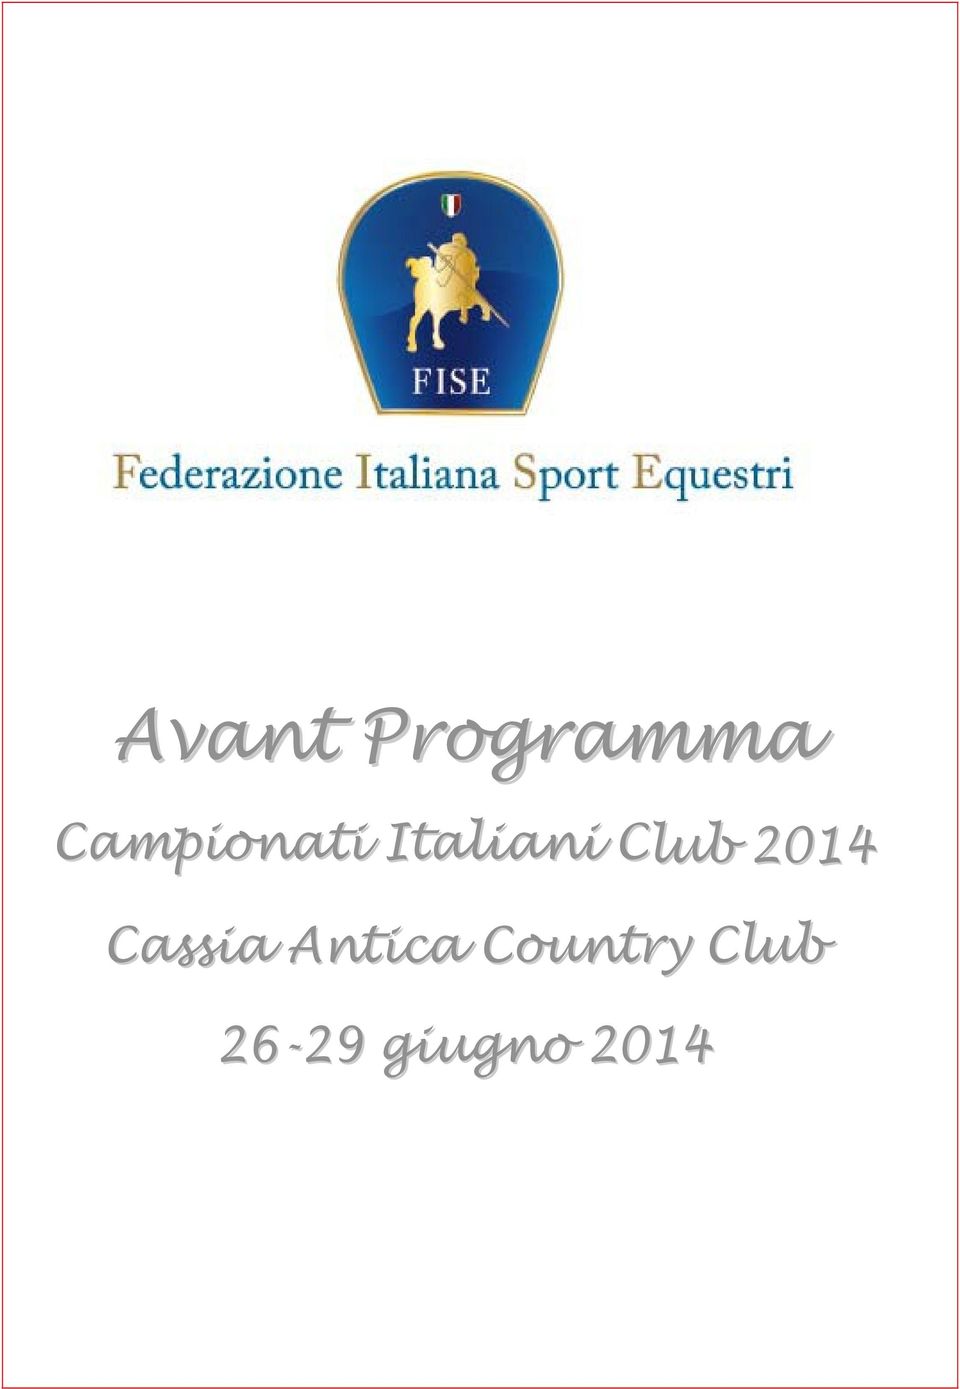 Club 2014 Cassia